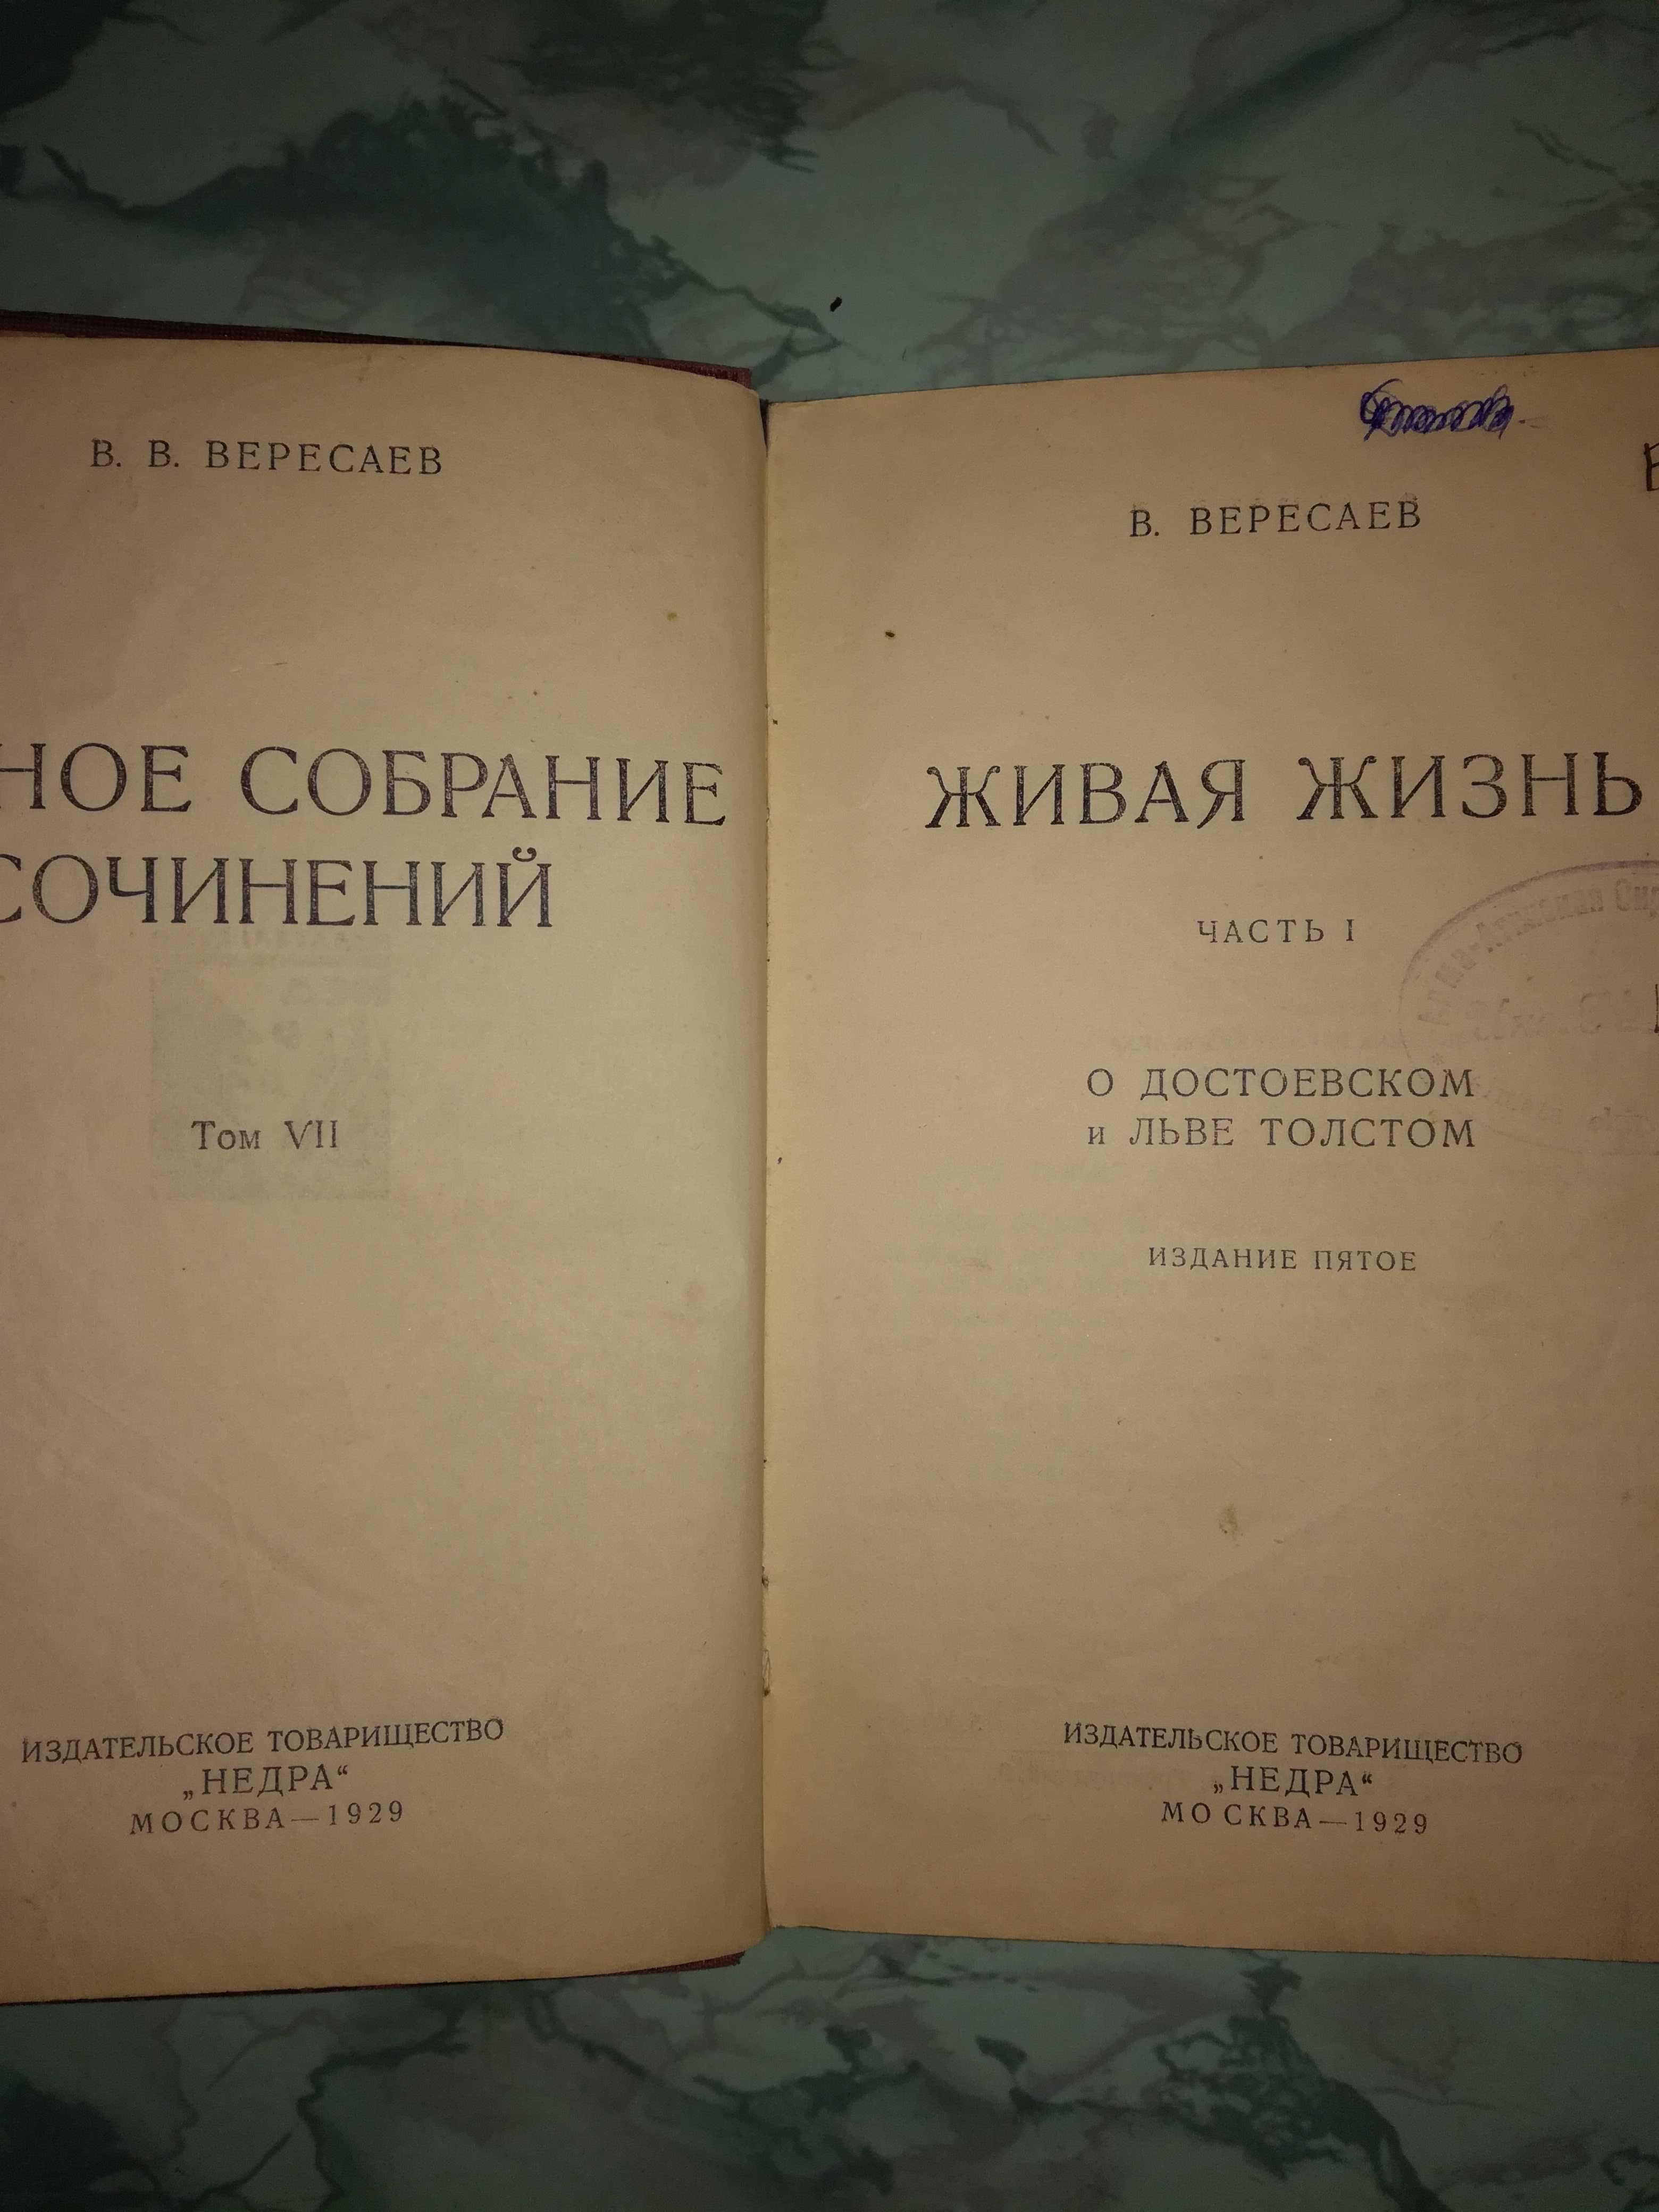 Книги И.С .Тургенева.1930г.